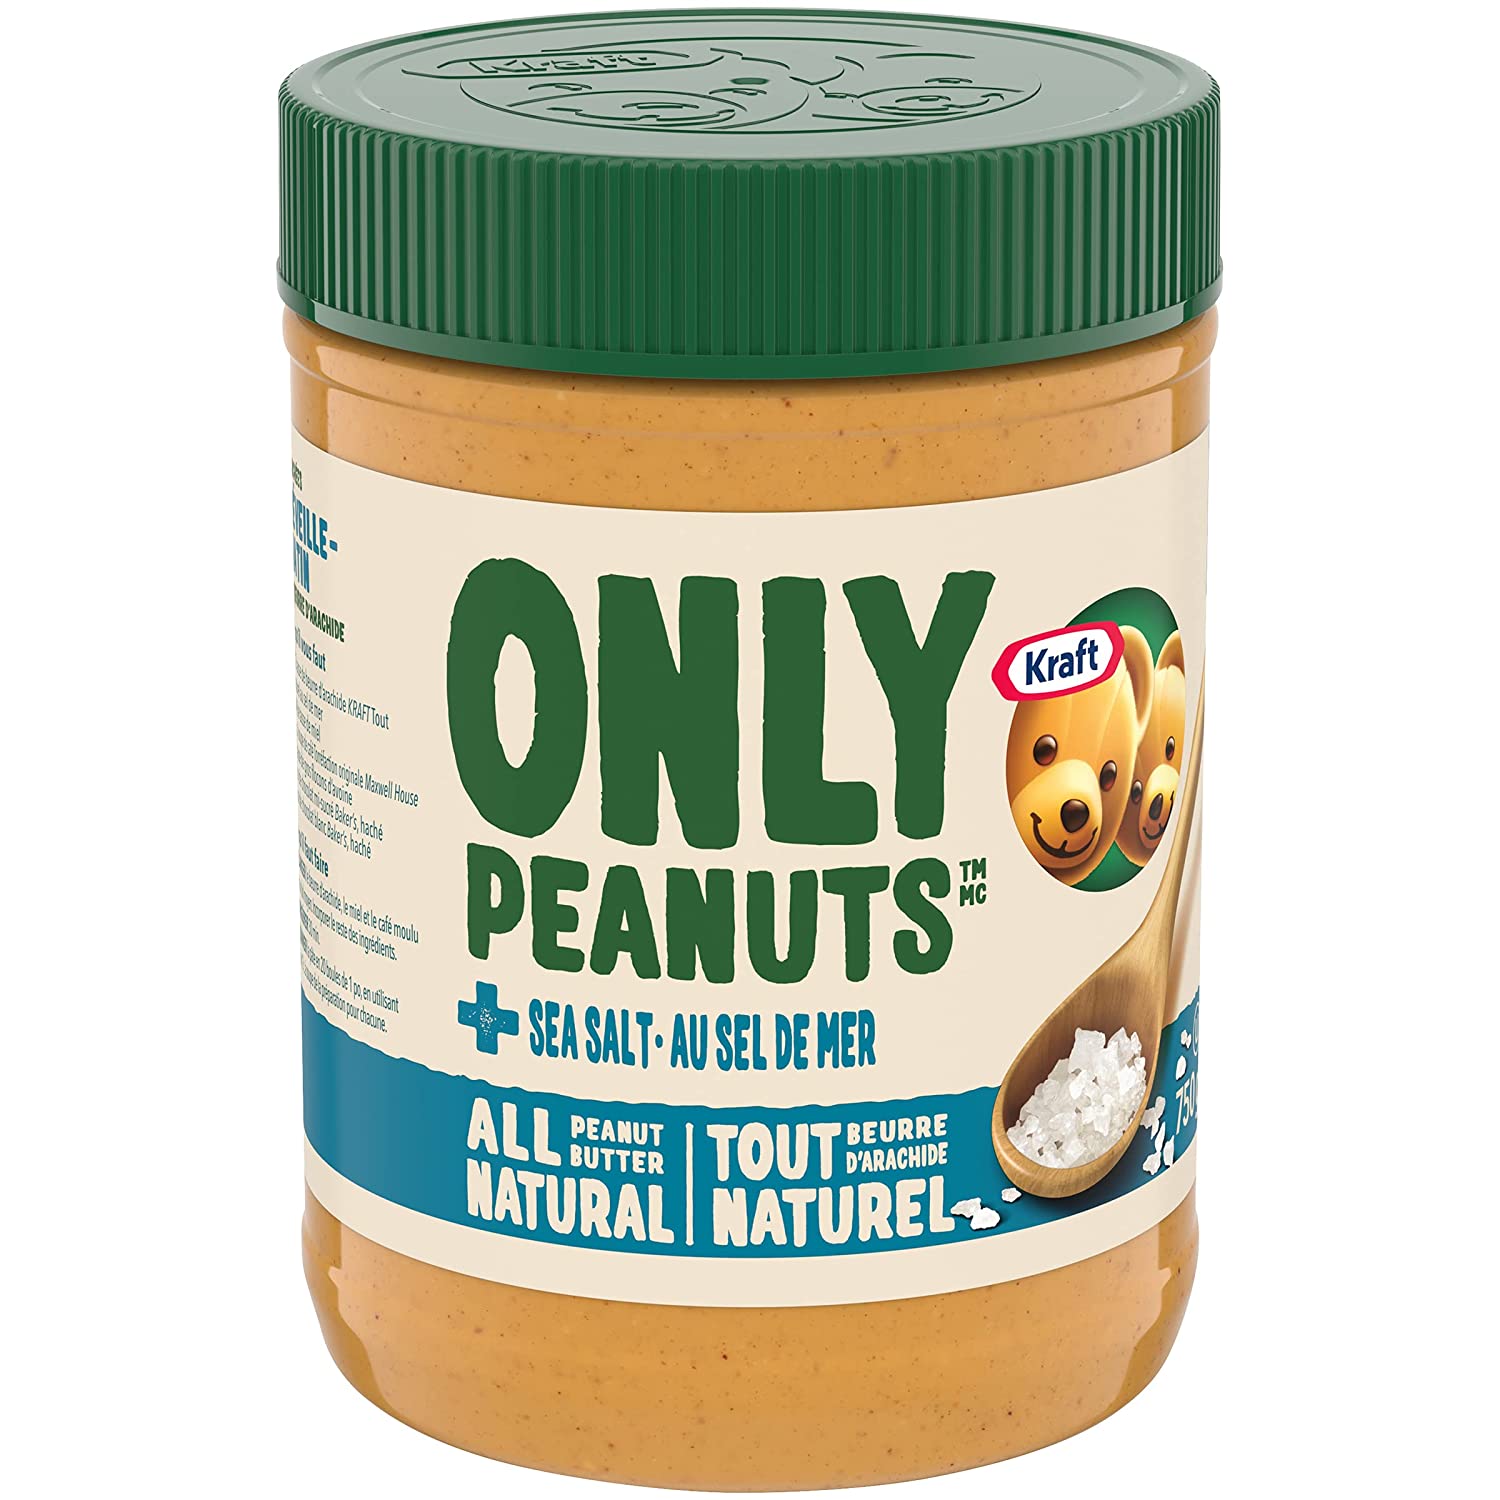 Kraft all natural peanut butter